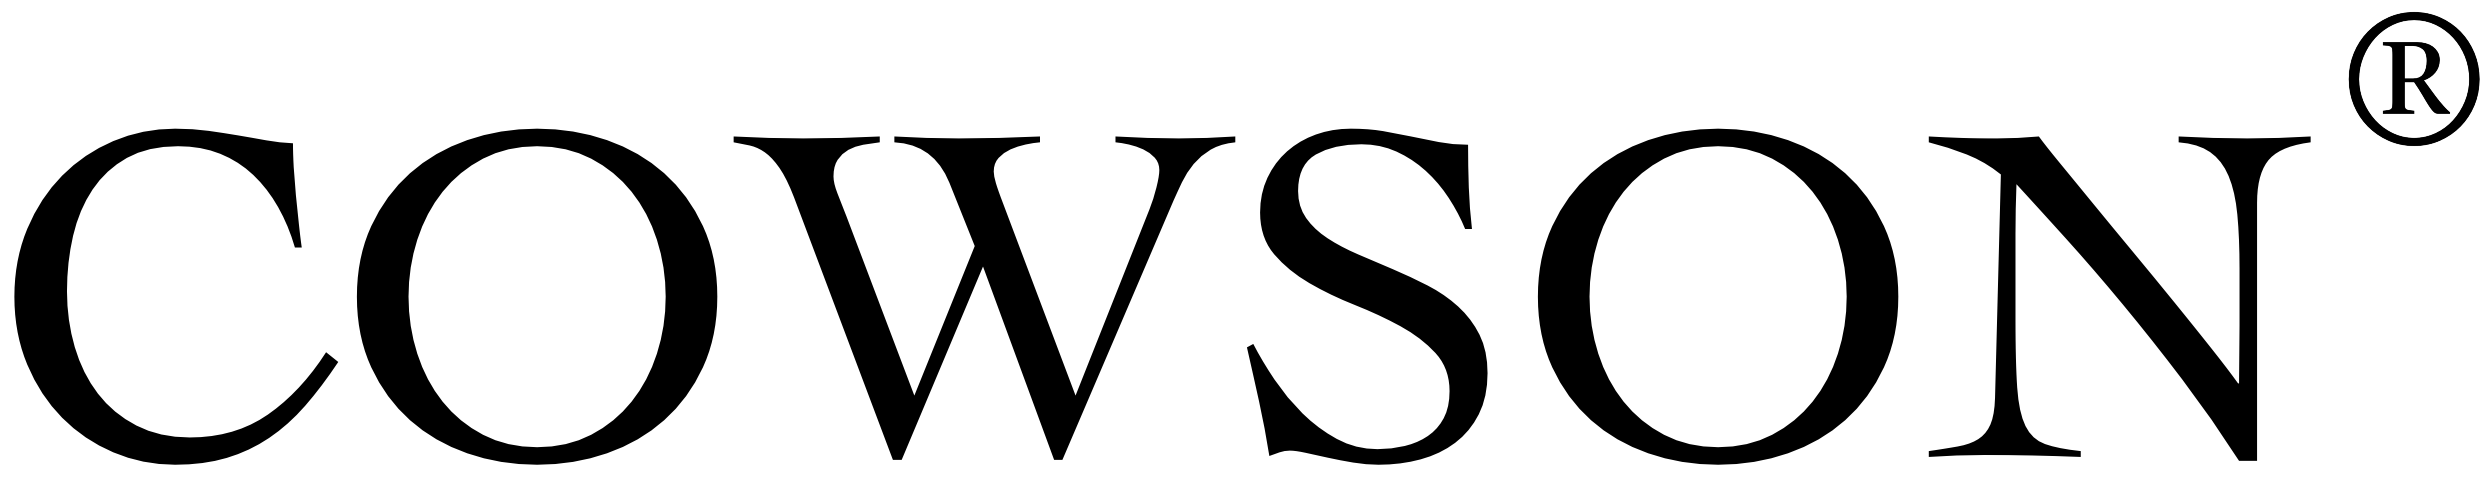 Logo Cowson 1